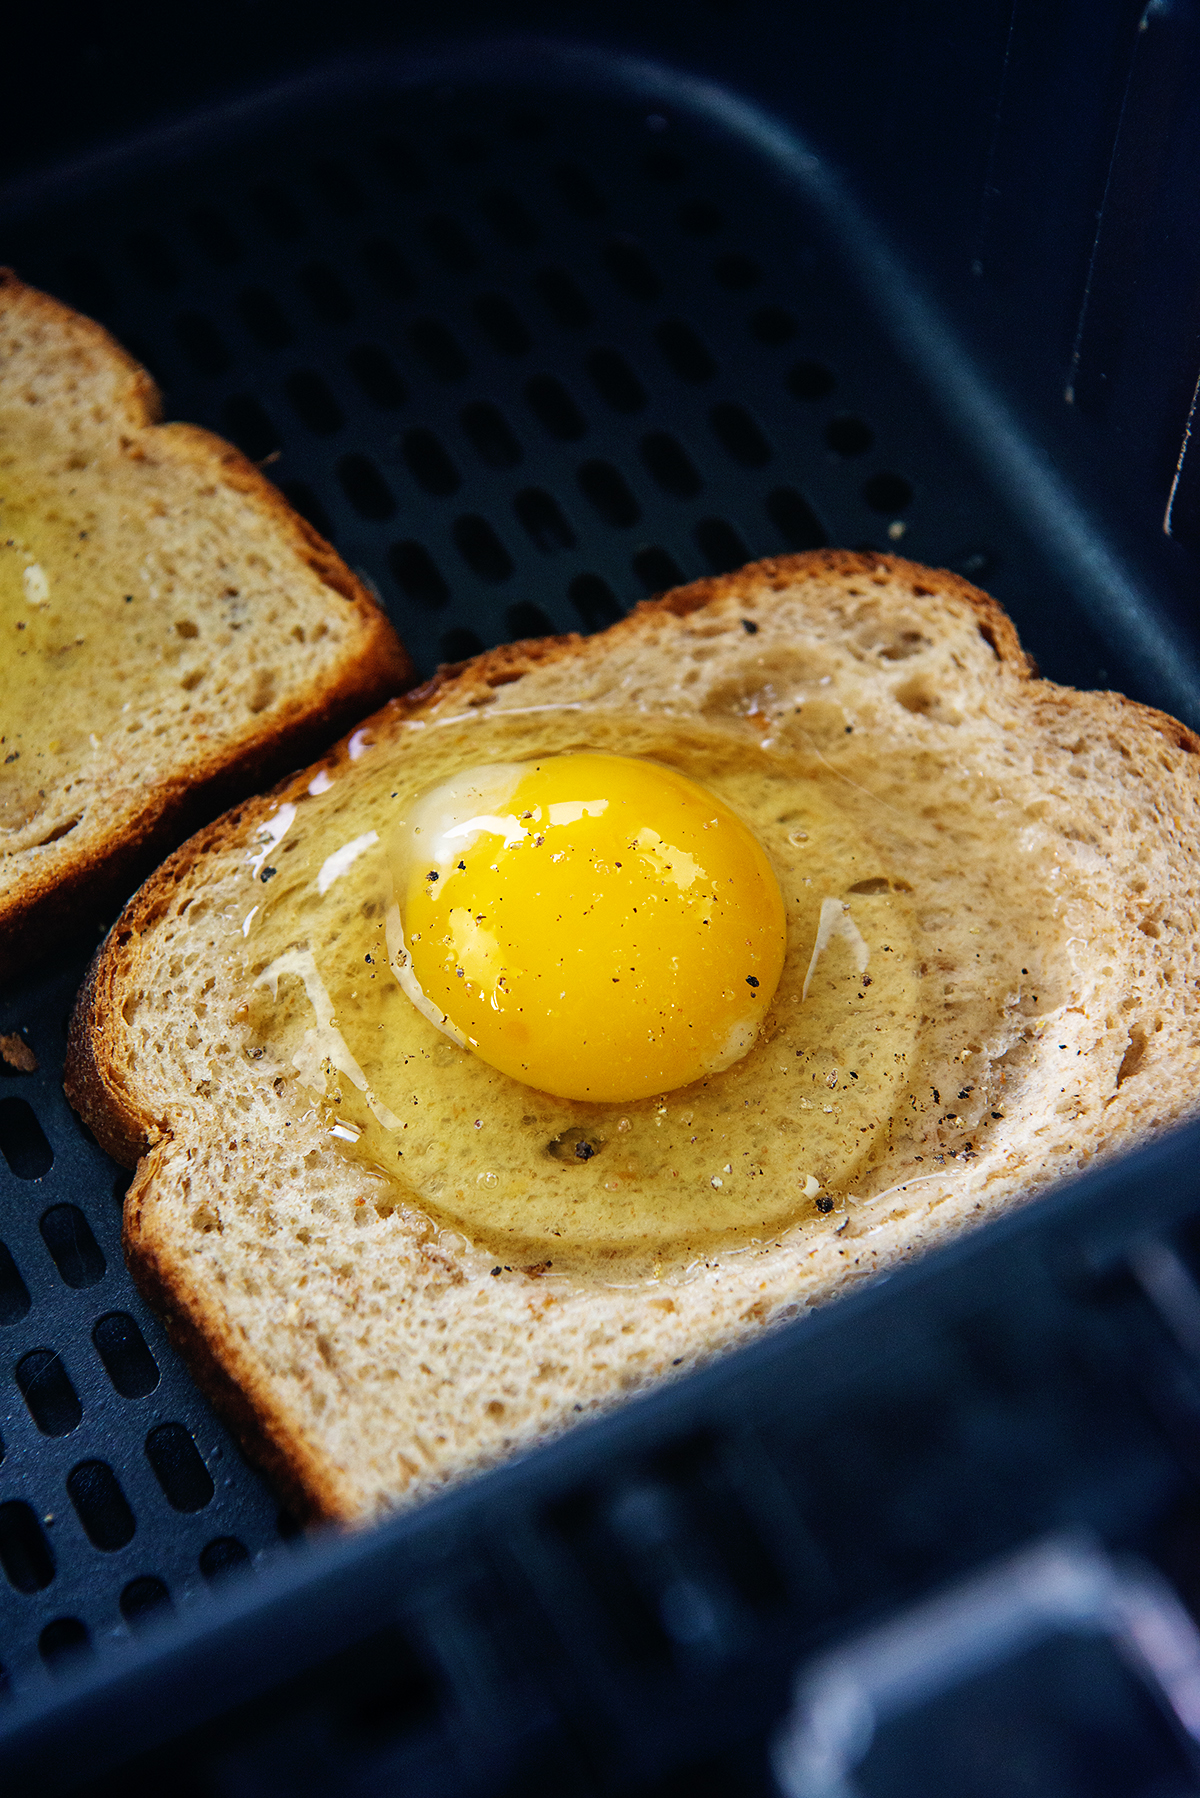 egg cracked onto slice of bread.